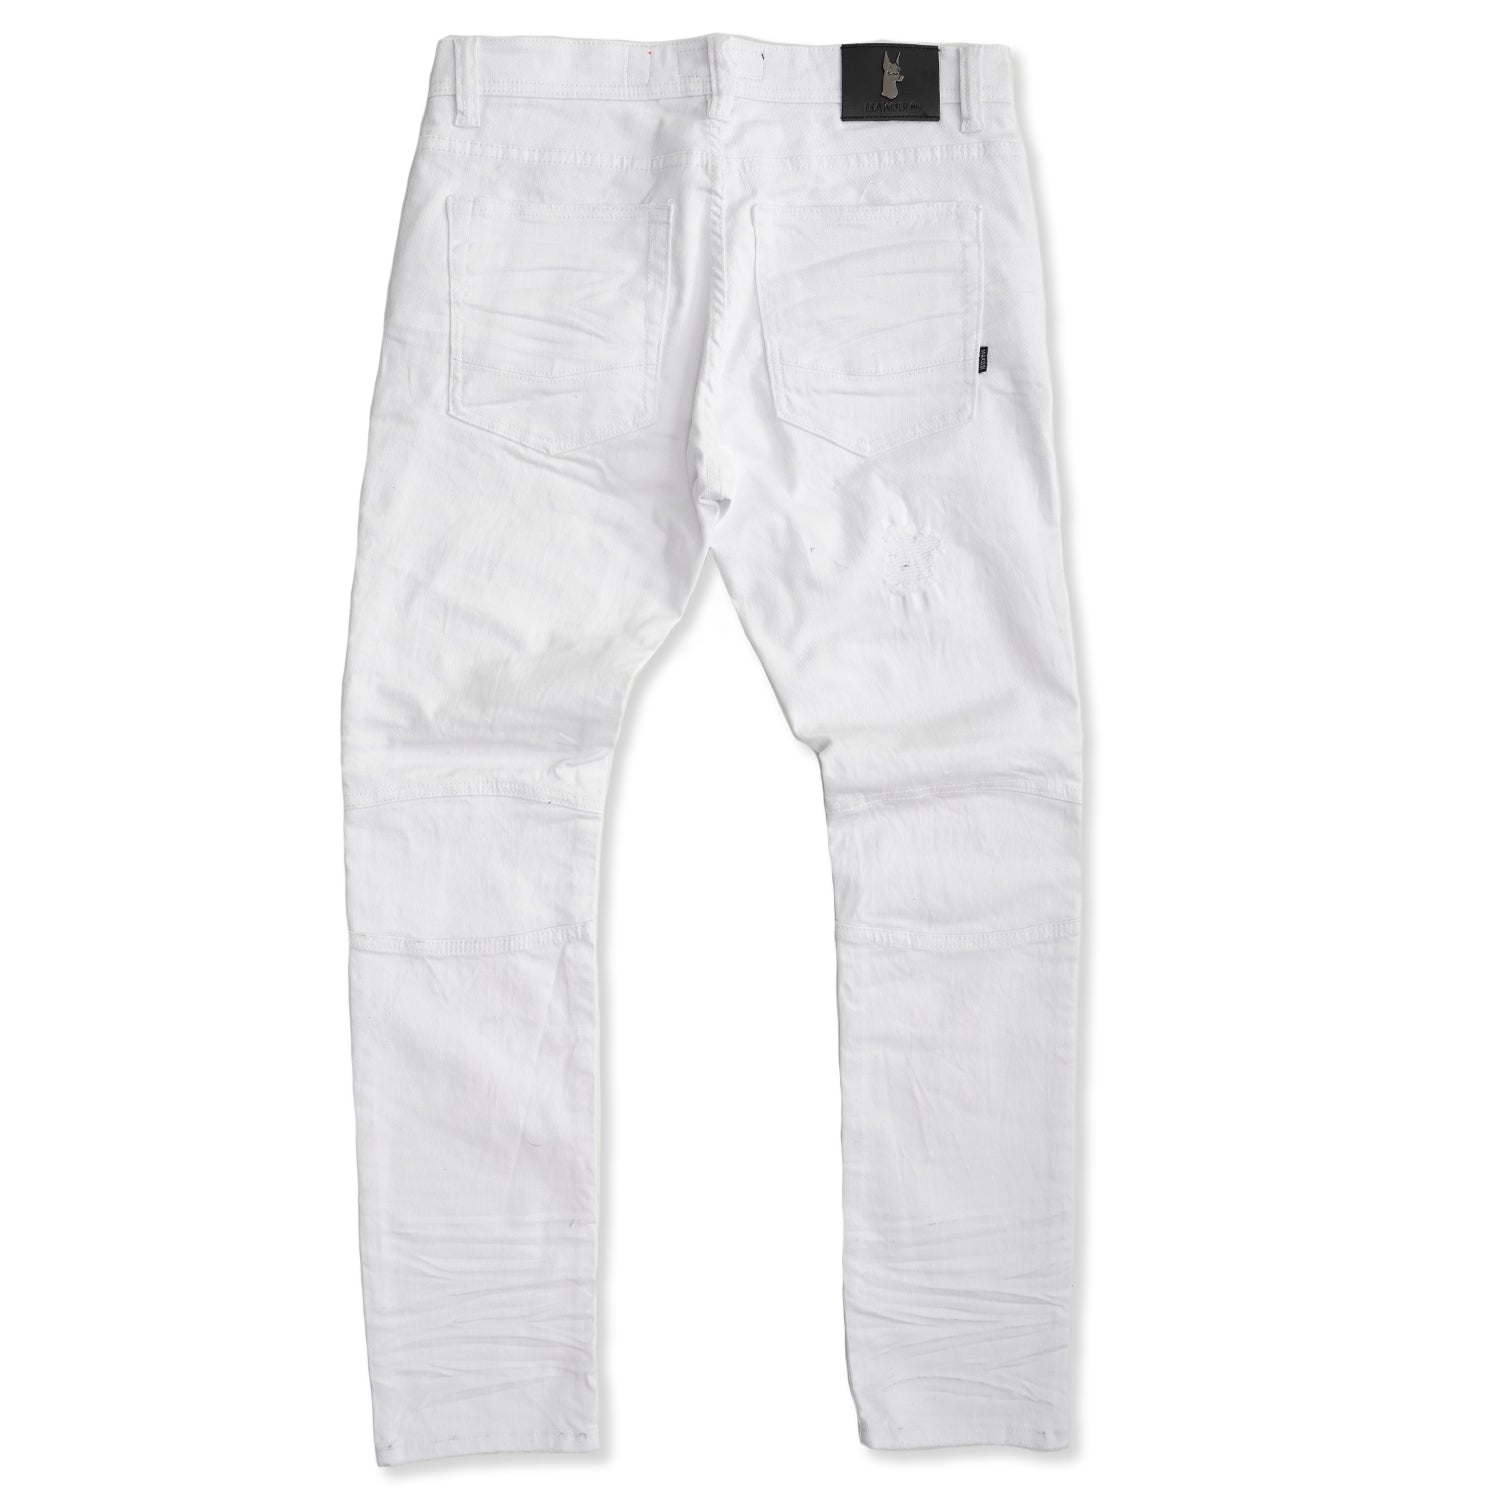 M1786 Makobi Prado Biker Jeans pẹlu Rip & Tunṣe - White